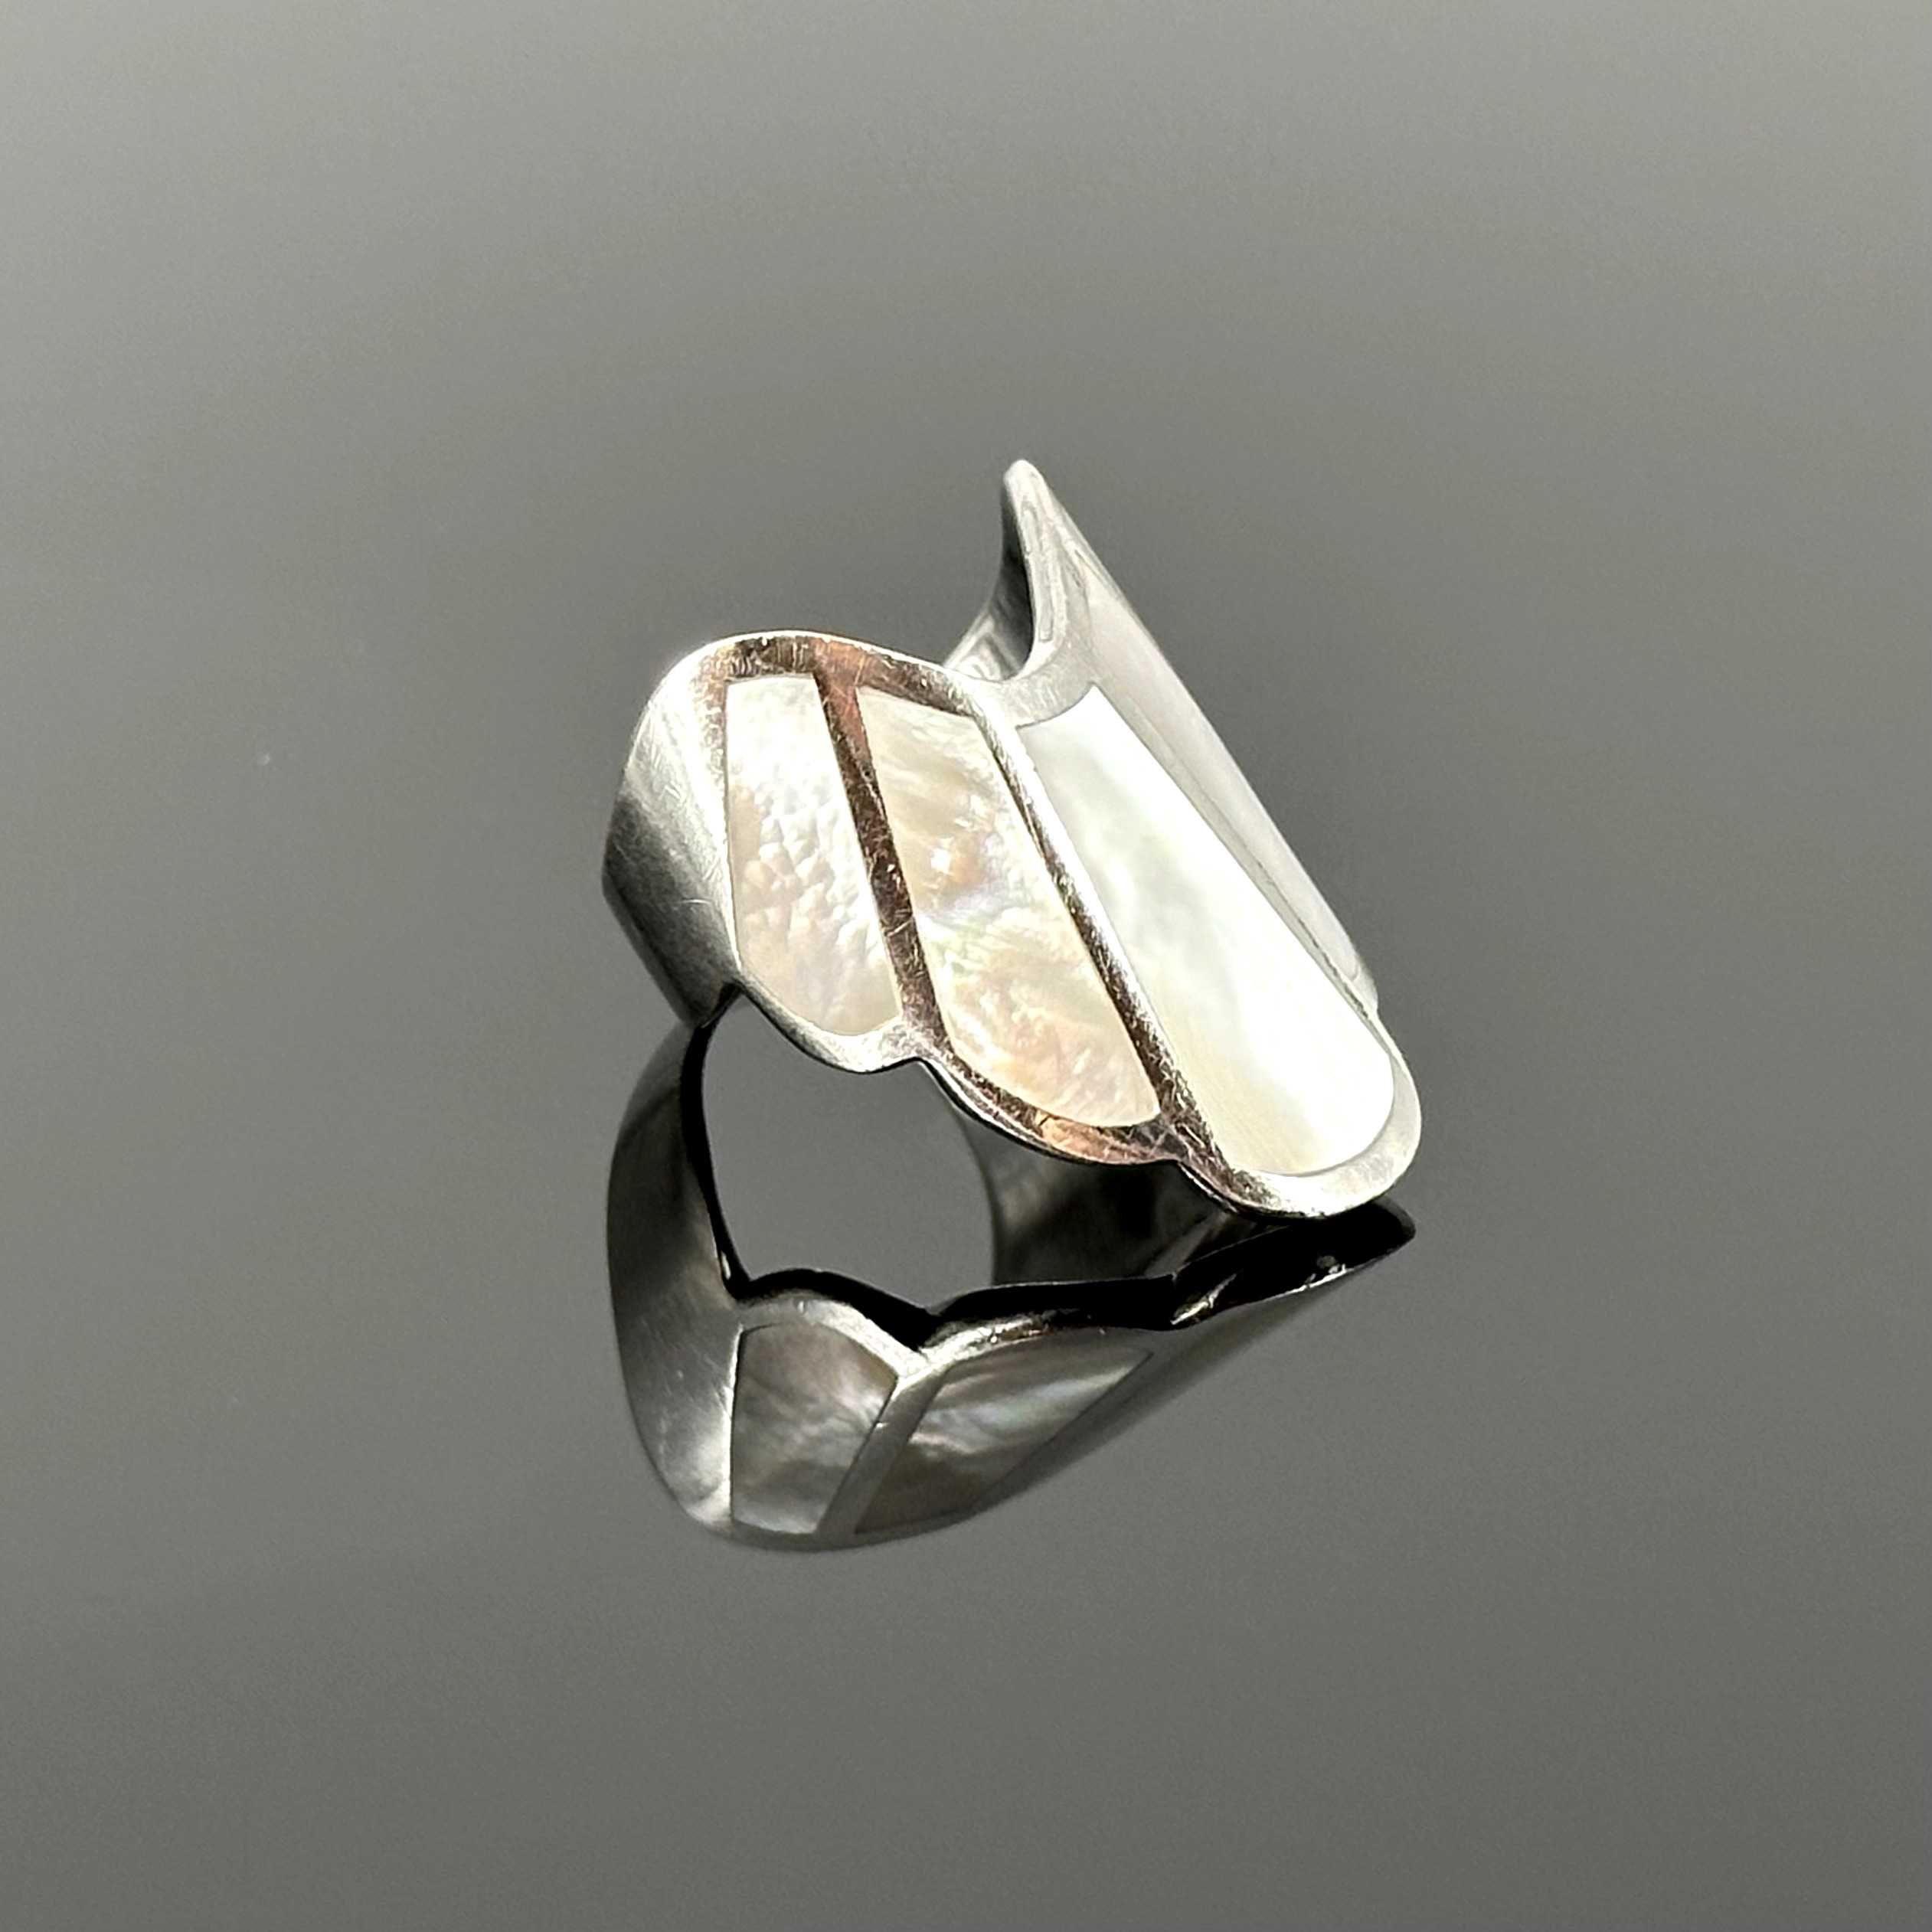 Srebro - Srebrny pierścionek z macicą perłową - próba srebra 925